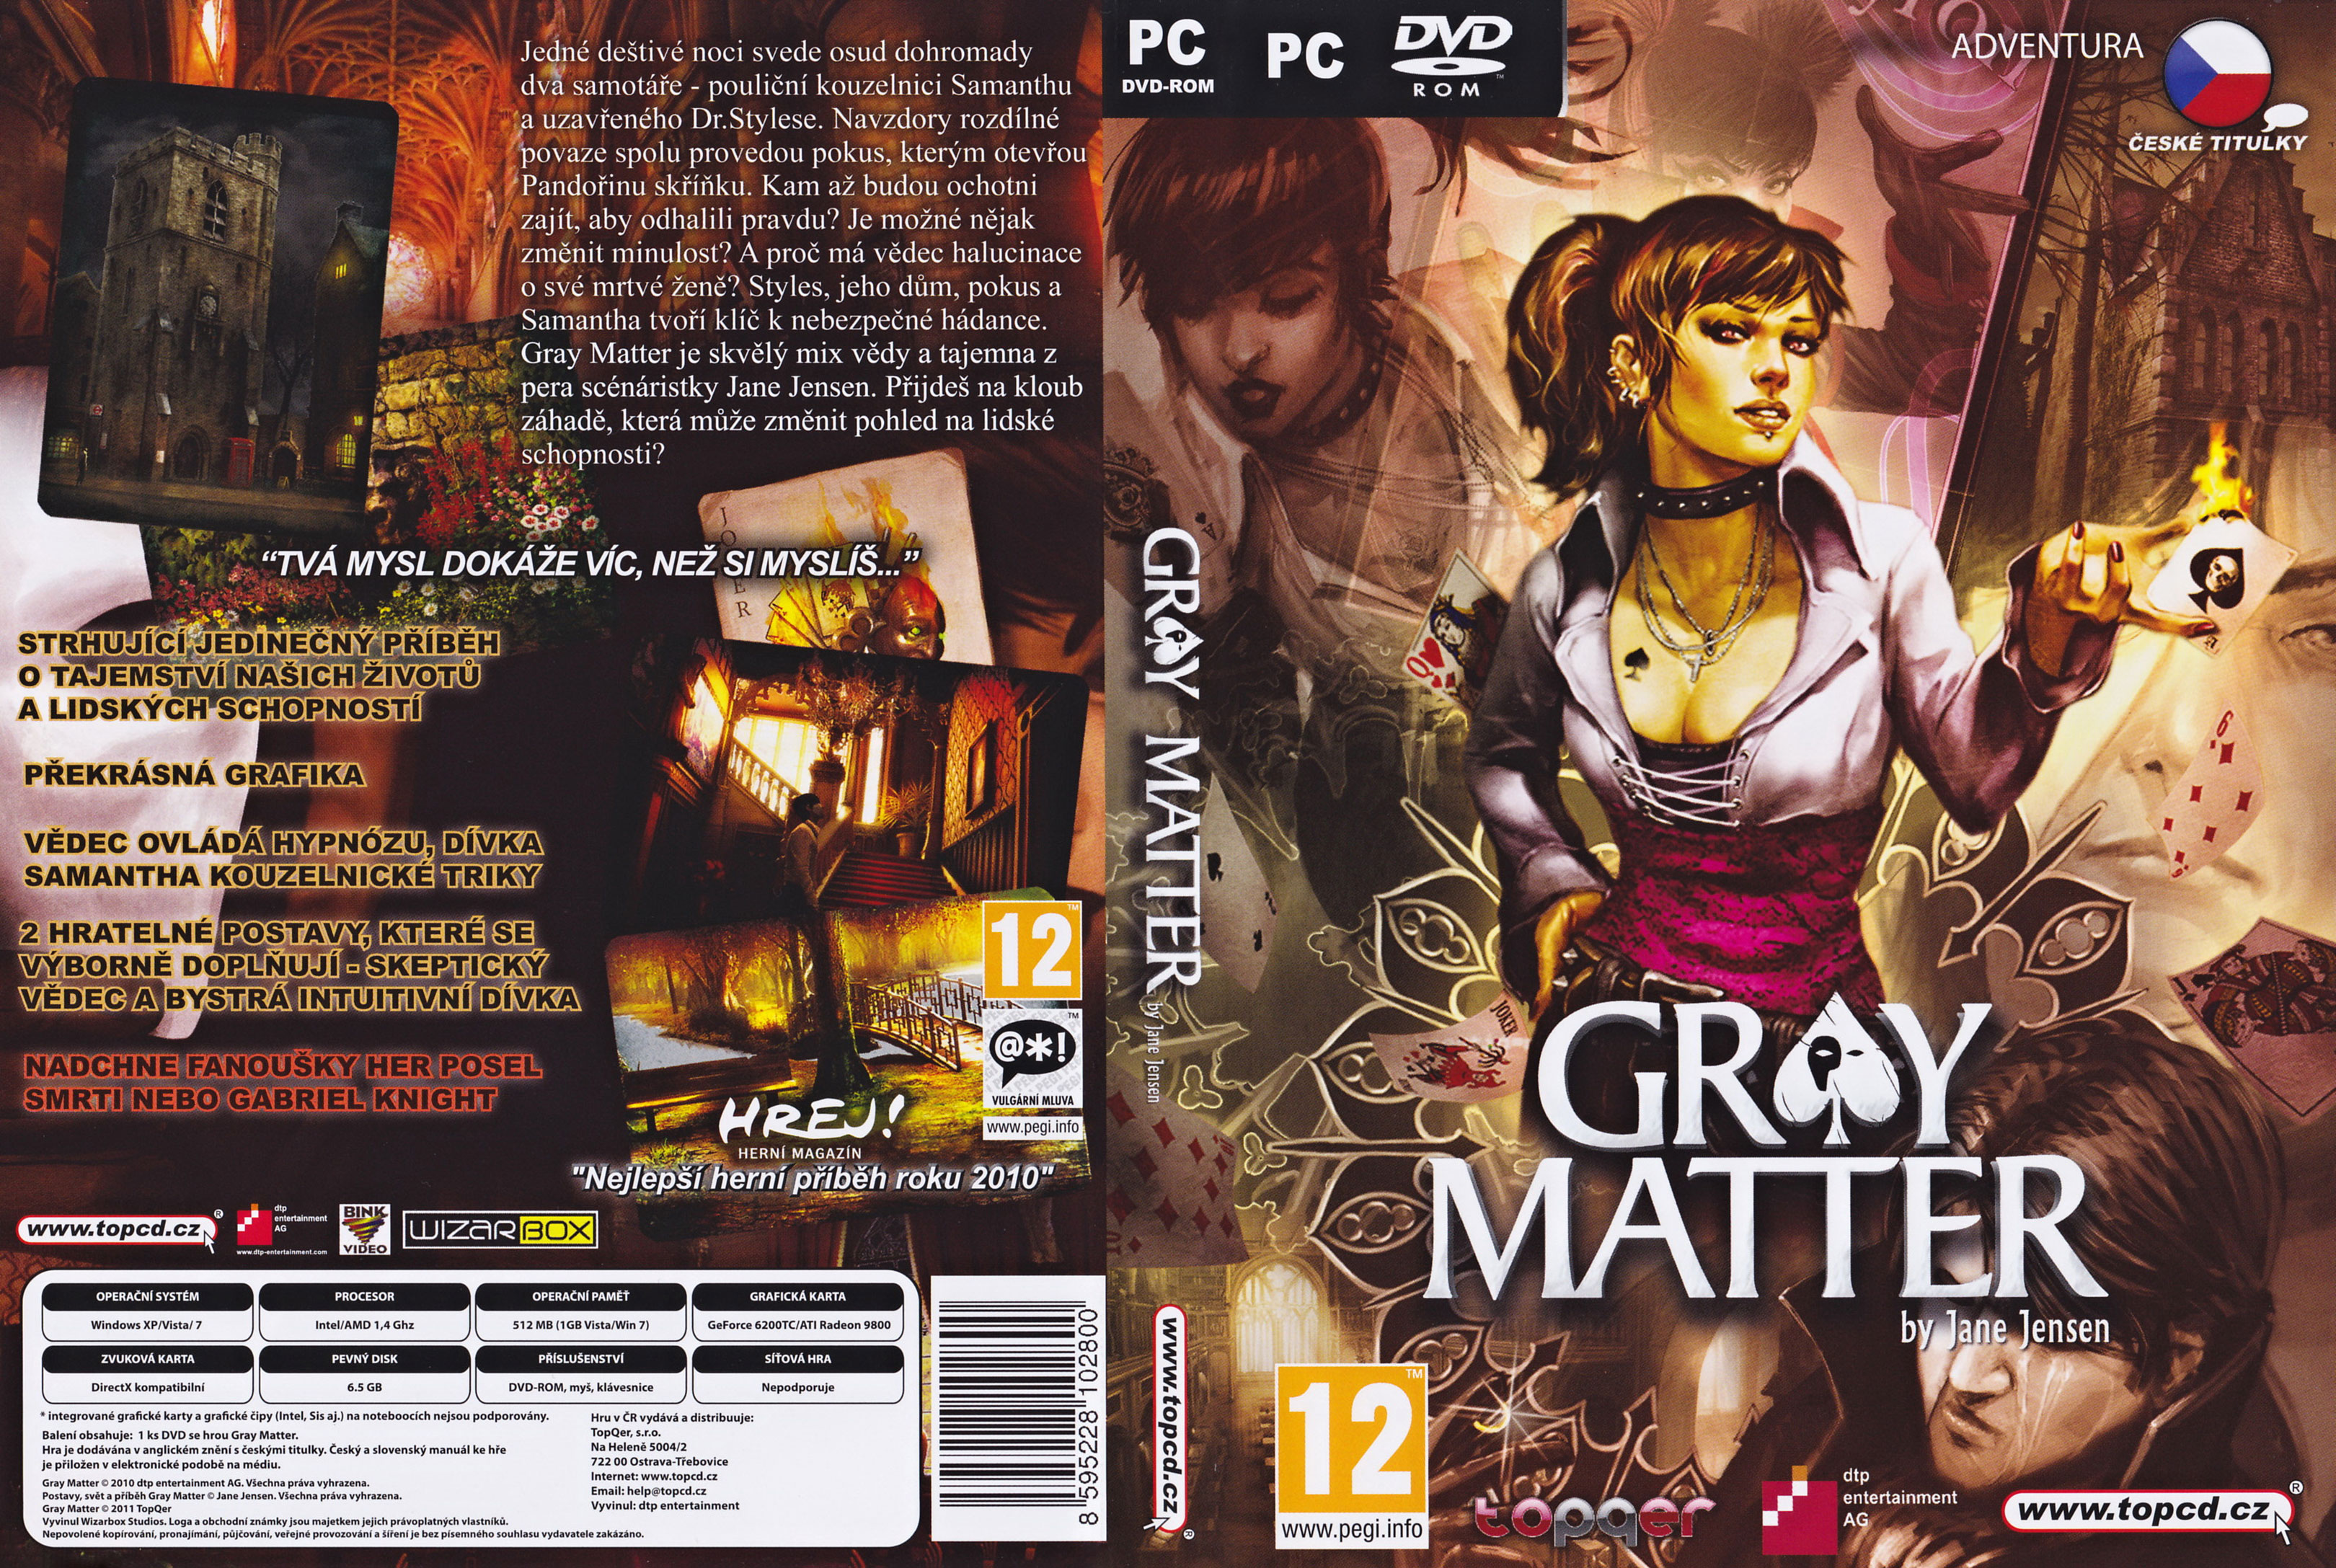 Gray Matter - DVD obal